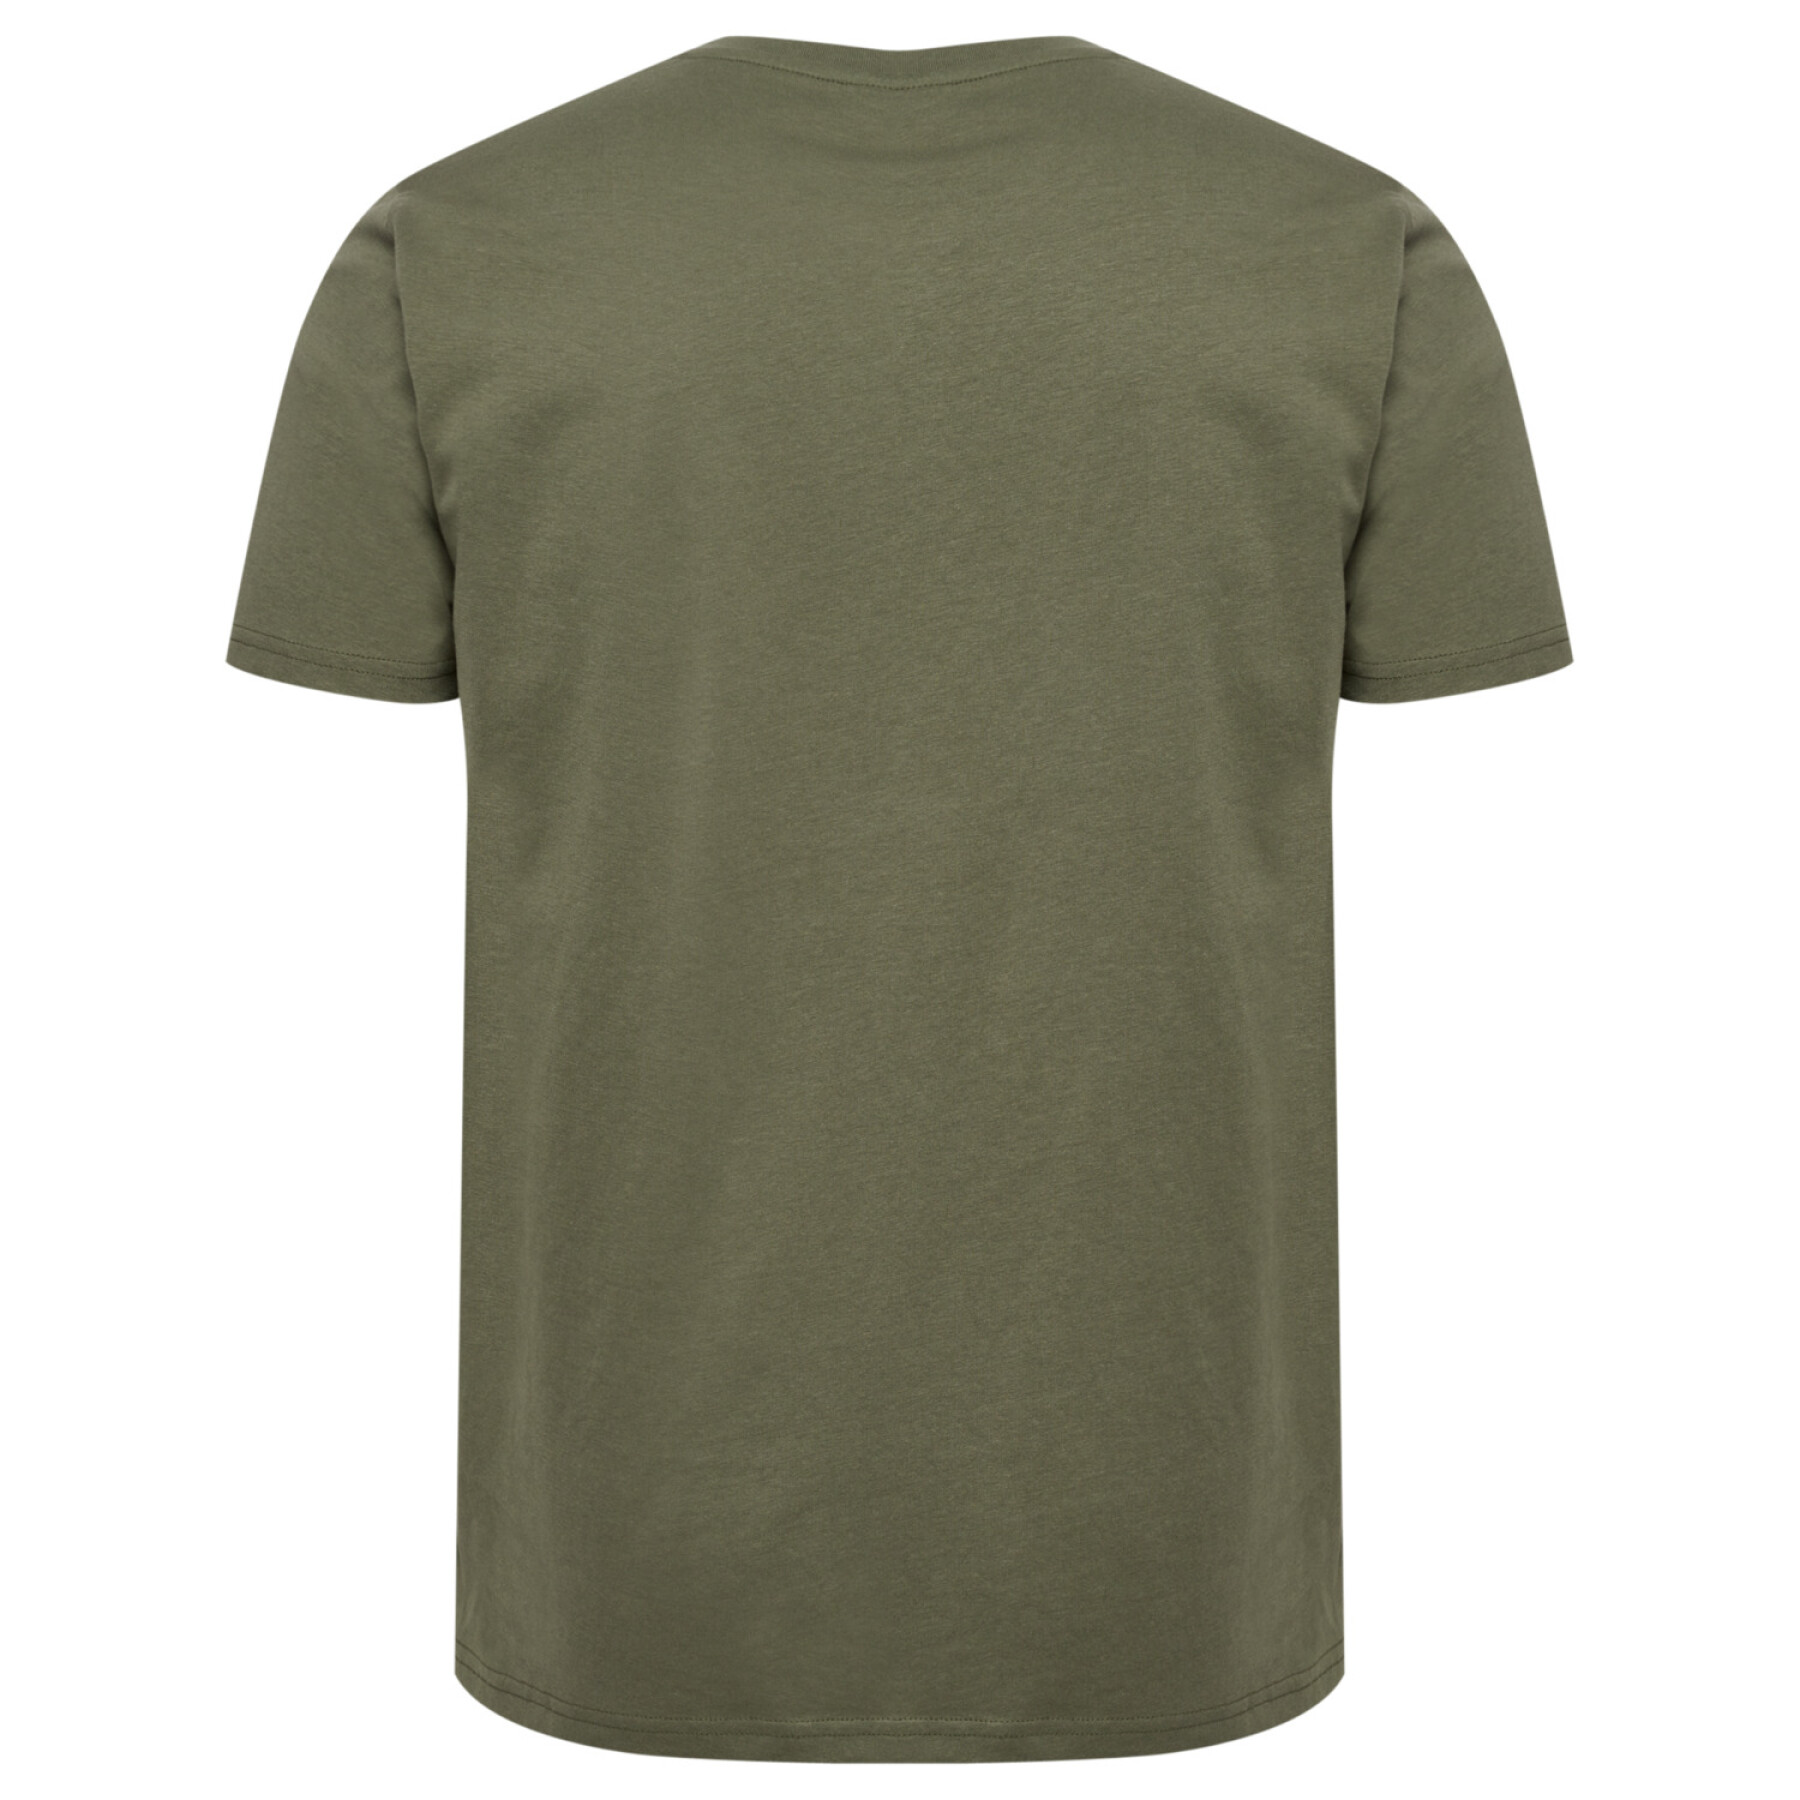 T-Shirt Hummel Legacy